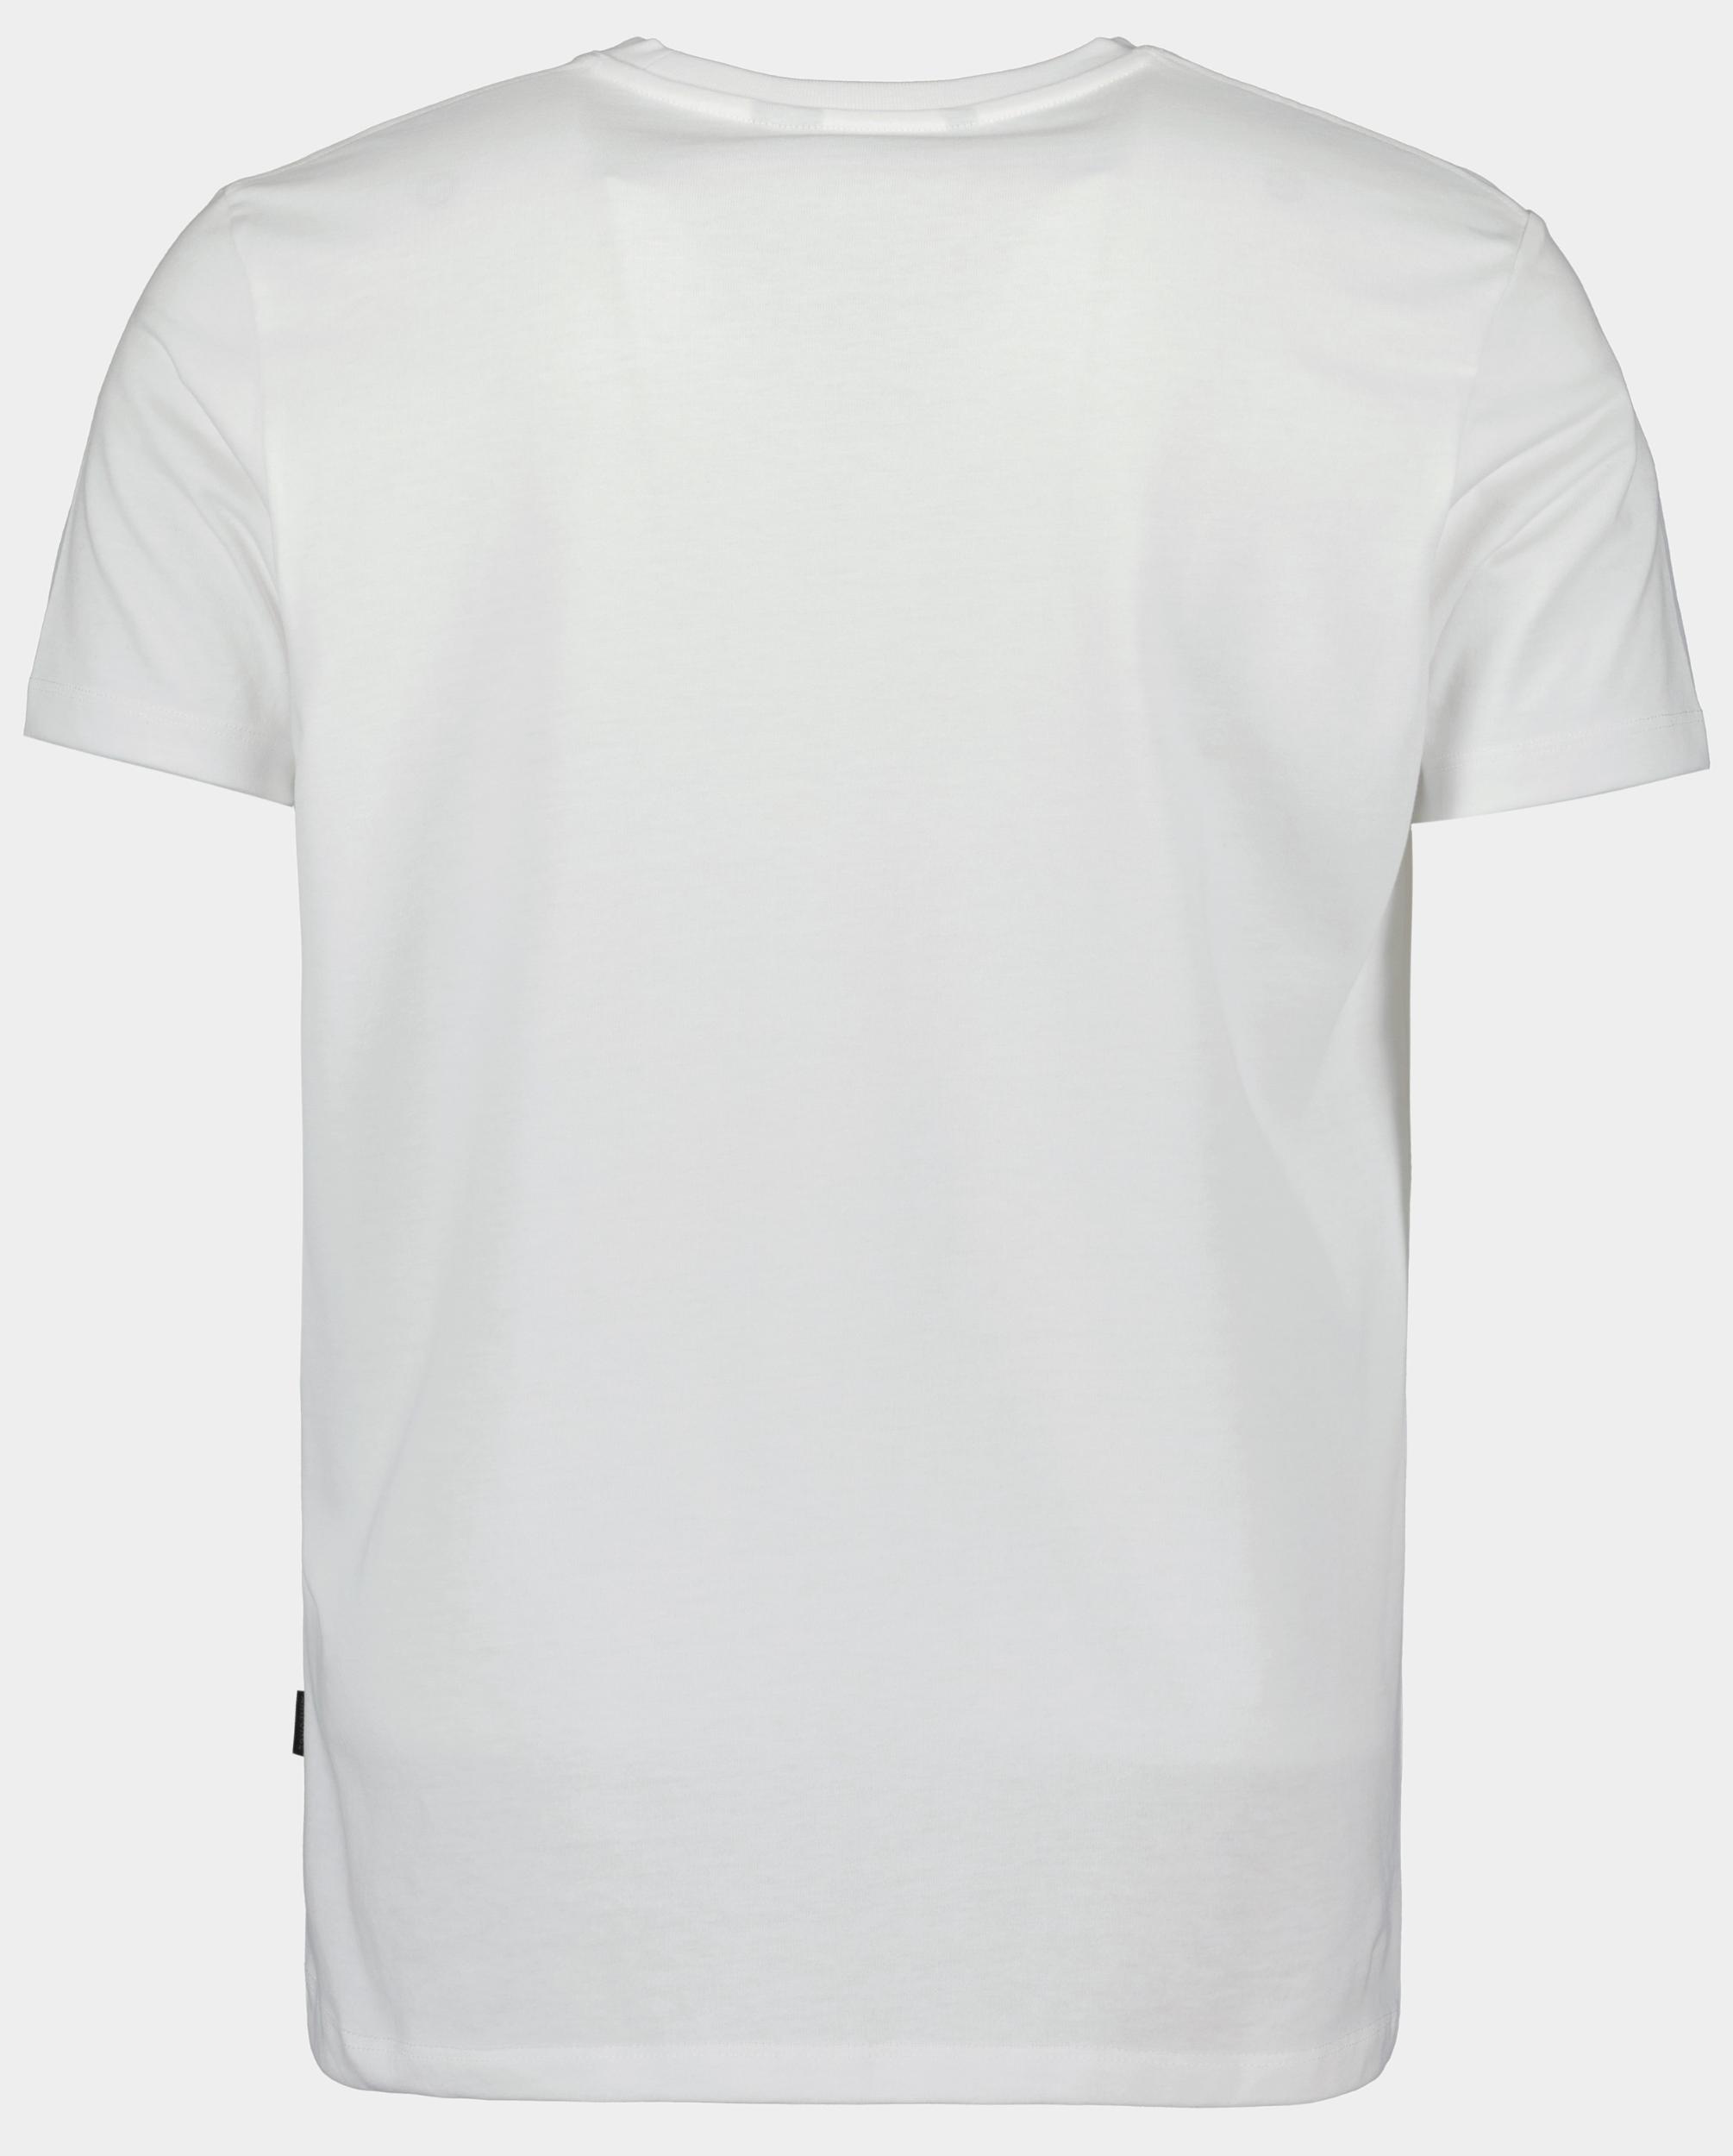 Airforce T-shirt korte mouw Wit Airfoce Basic T-shirt TBM0888/100